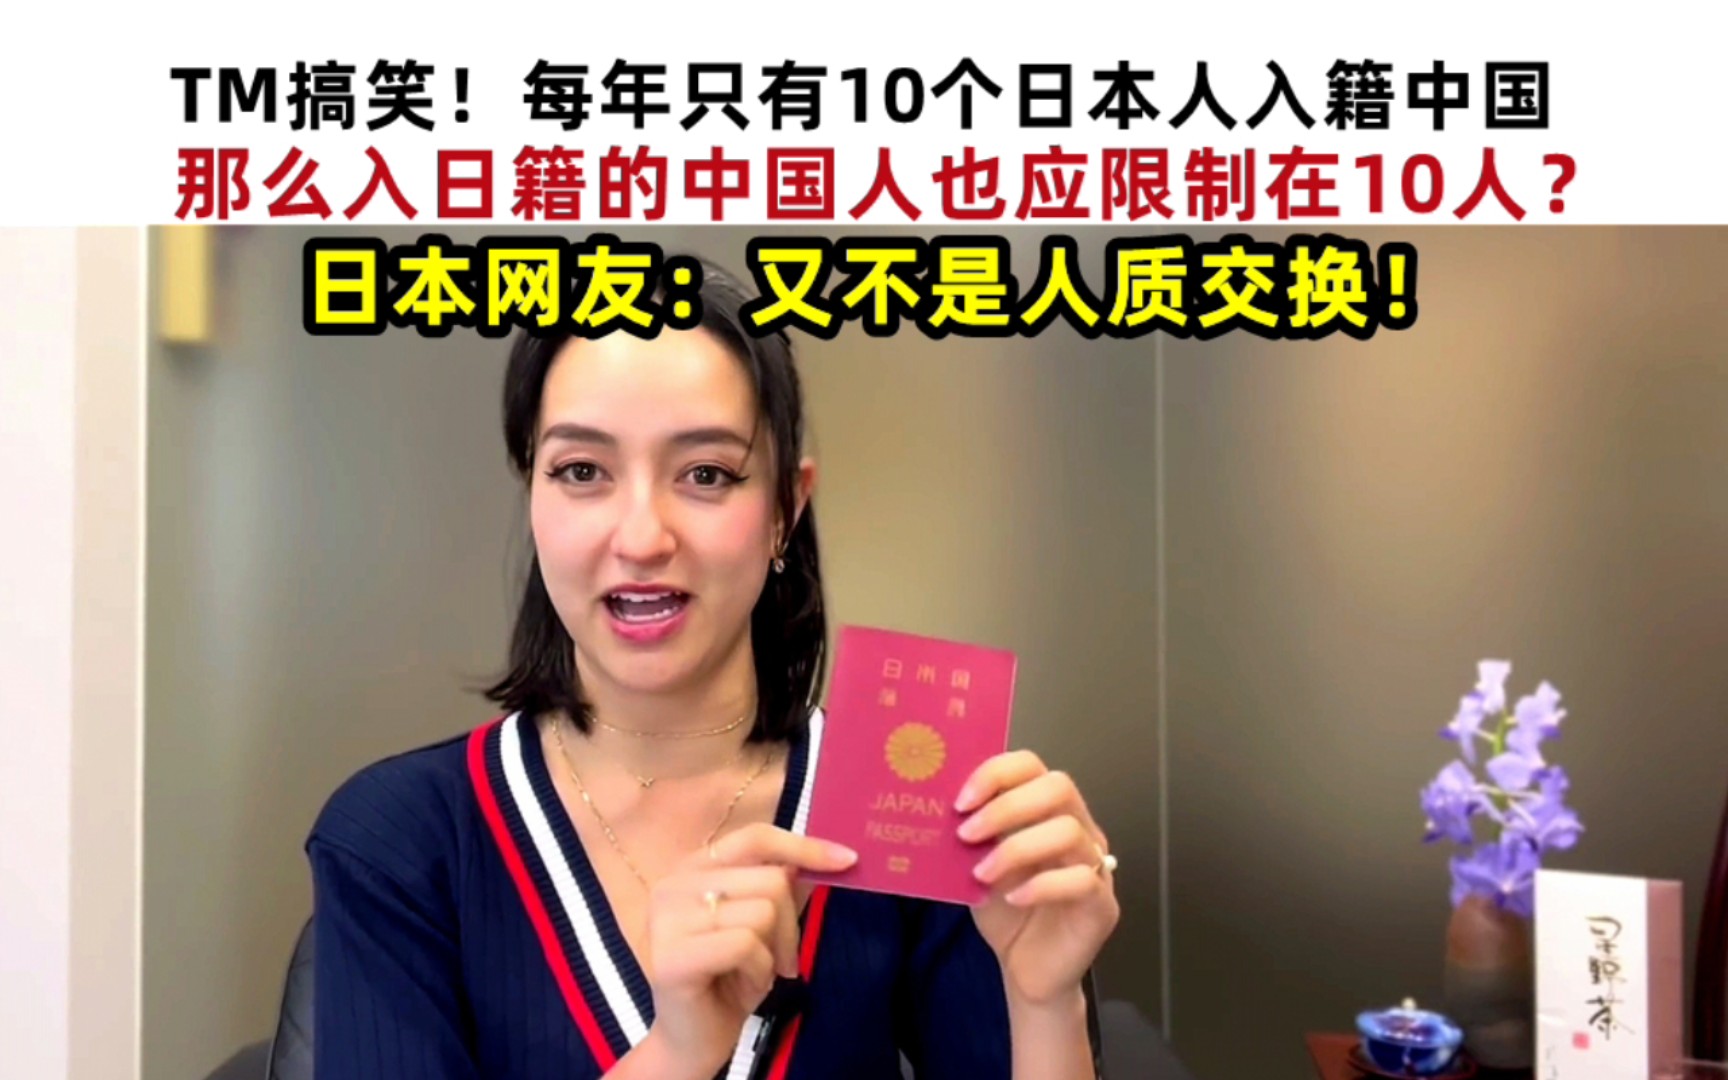 TM搞笑！每年只有10个日本人入籍中国，那入日籍的中国人也应限制在10人？日本网友：又不是人质交换！